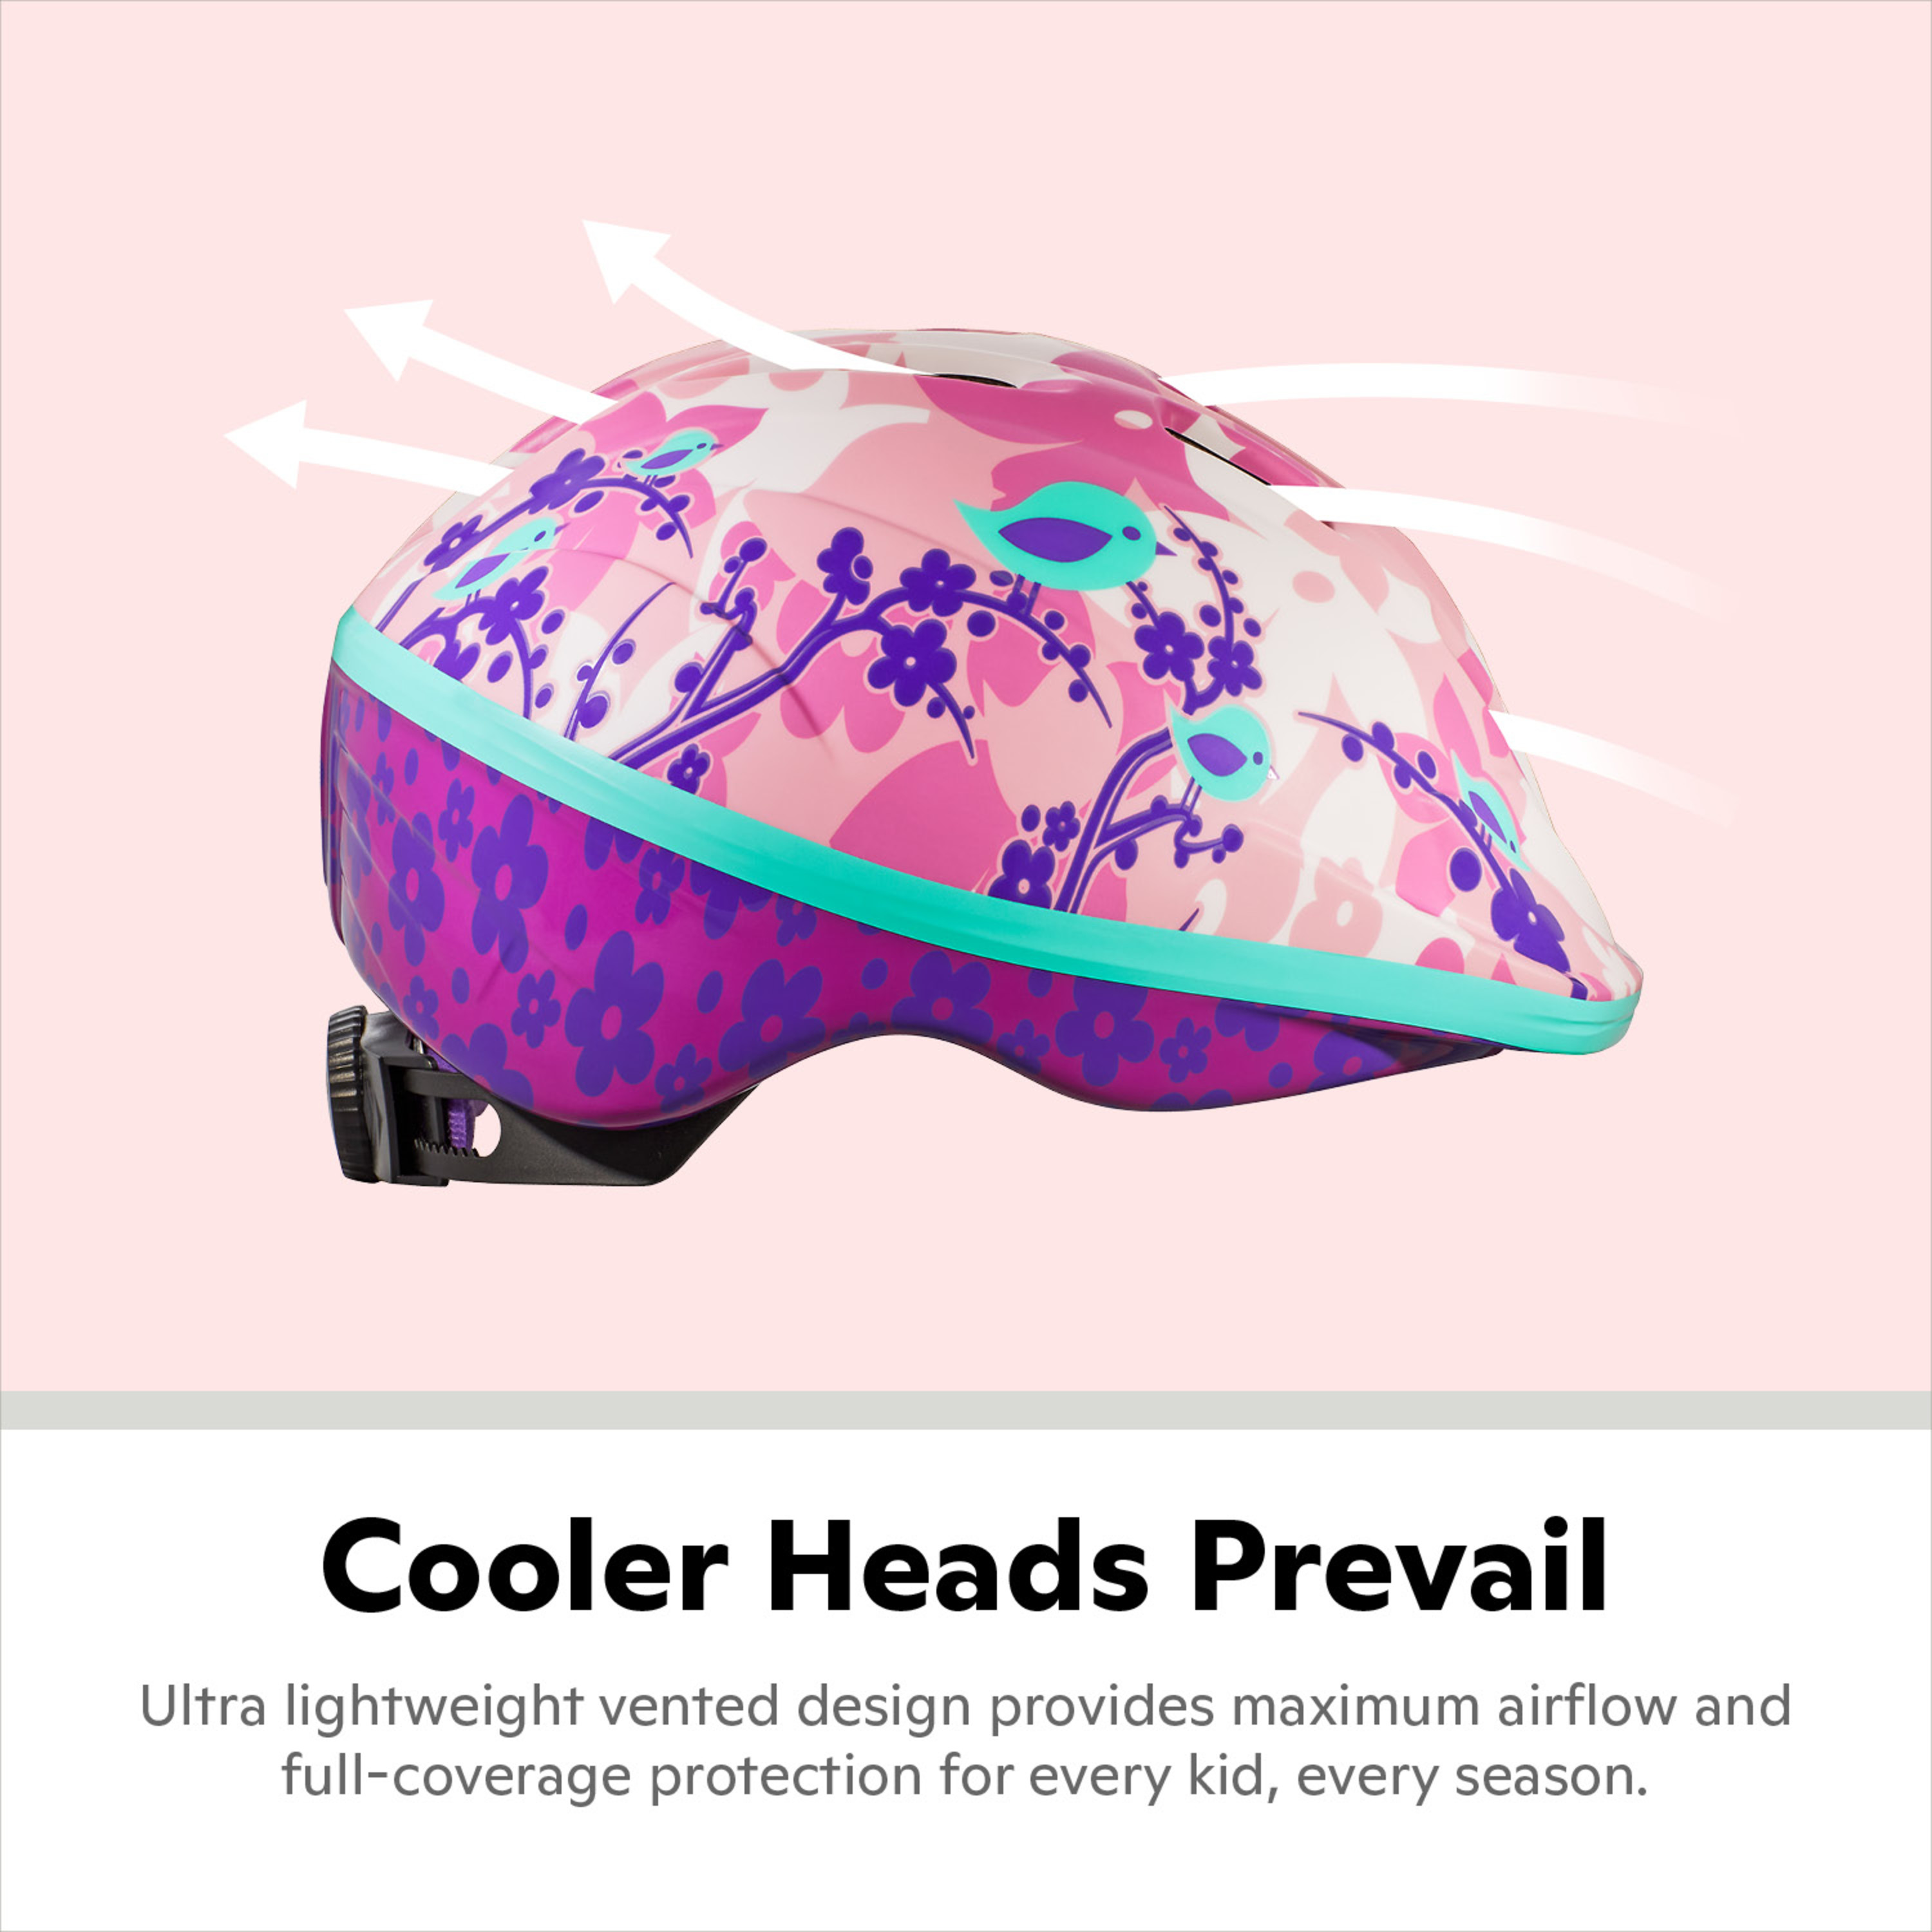 Schwinn Classic Bike Helmet for Kids, Ages 5-8, Pink - image 5 of 7